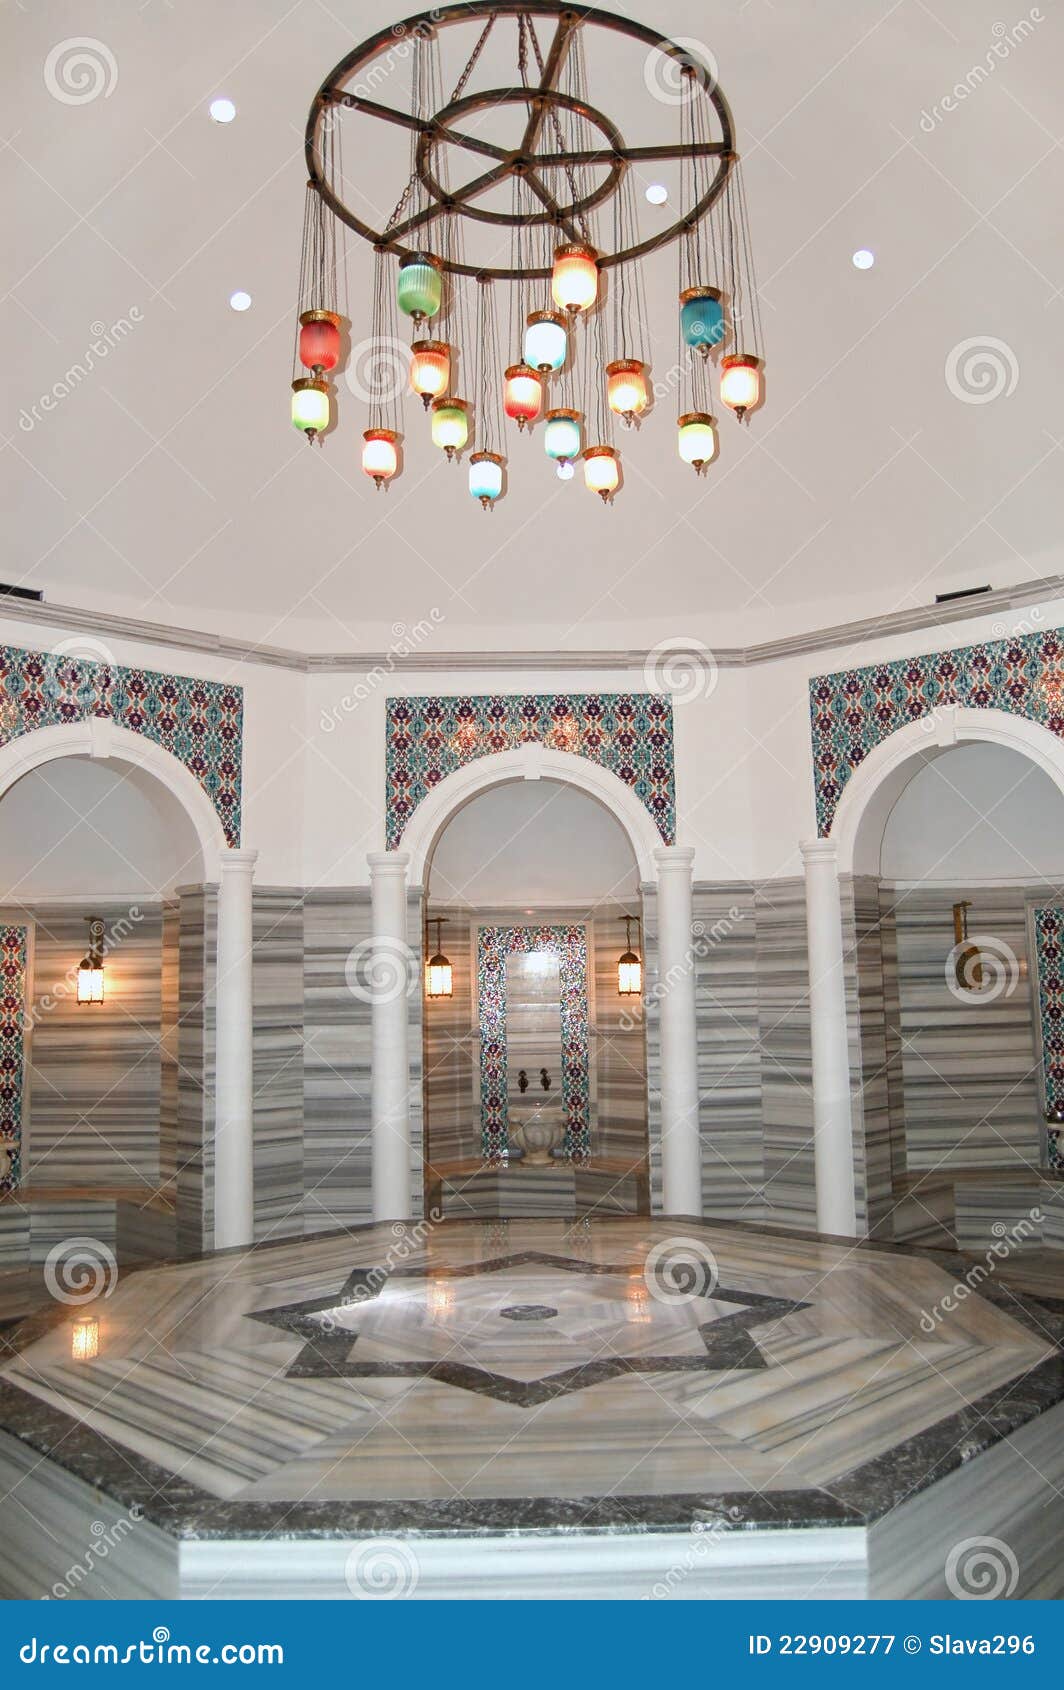 turkish bath (hamam) at hotel's spa